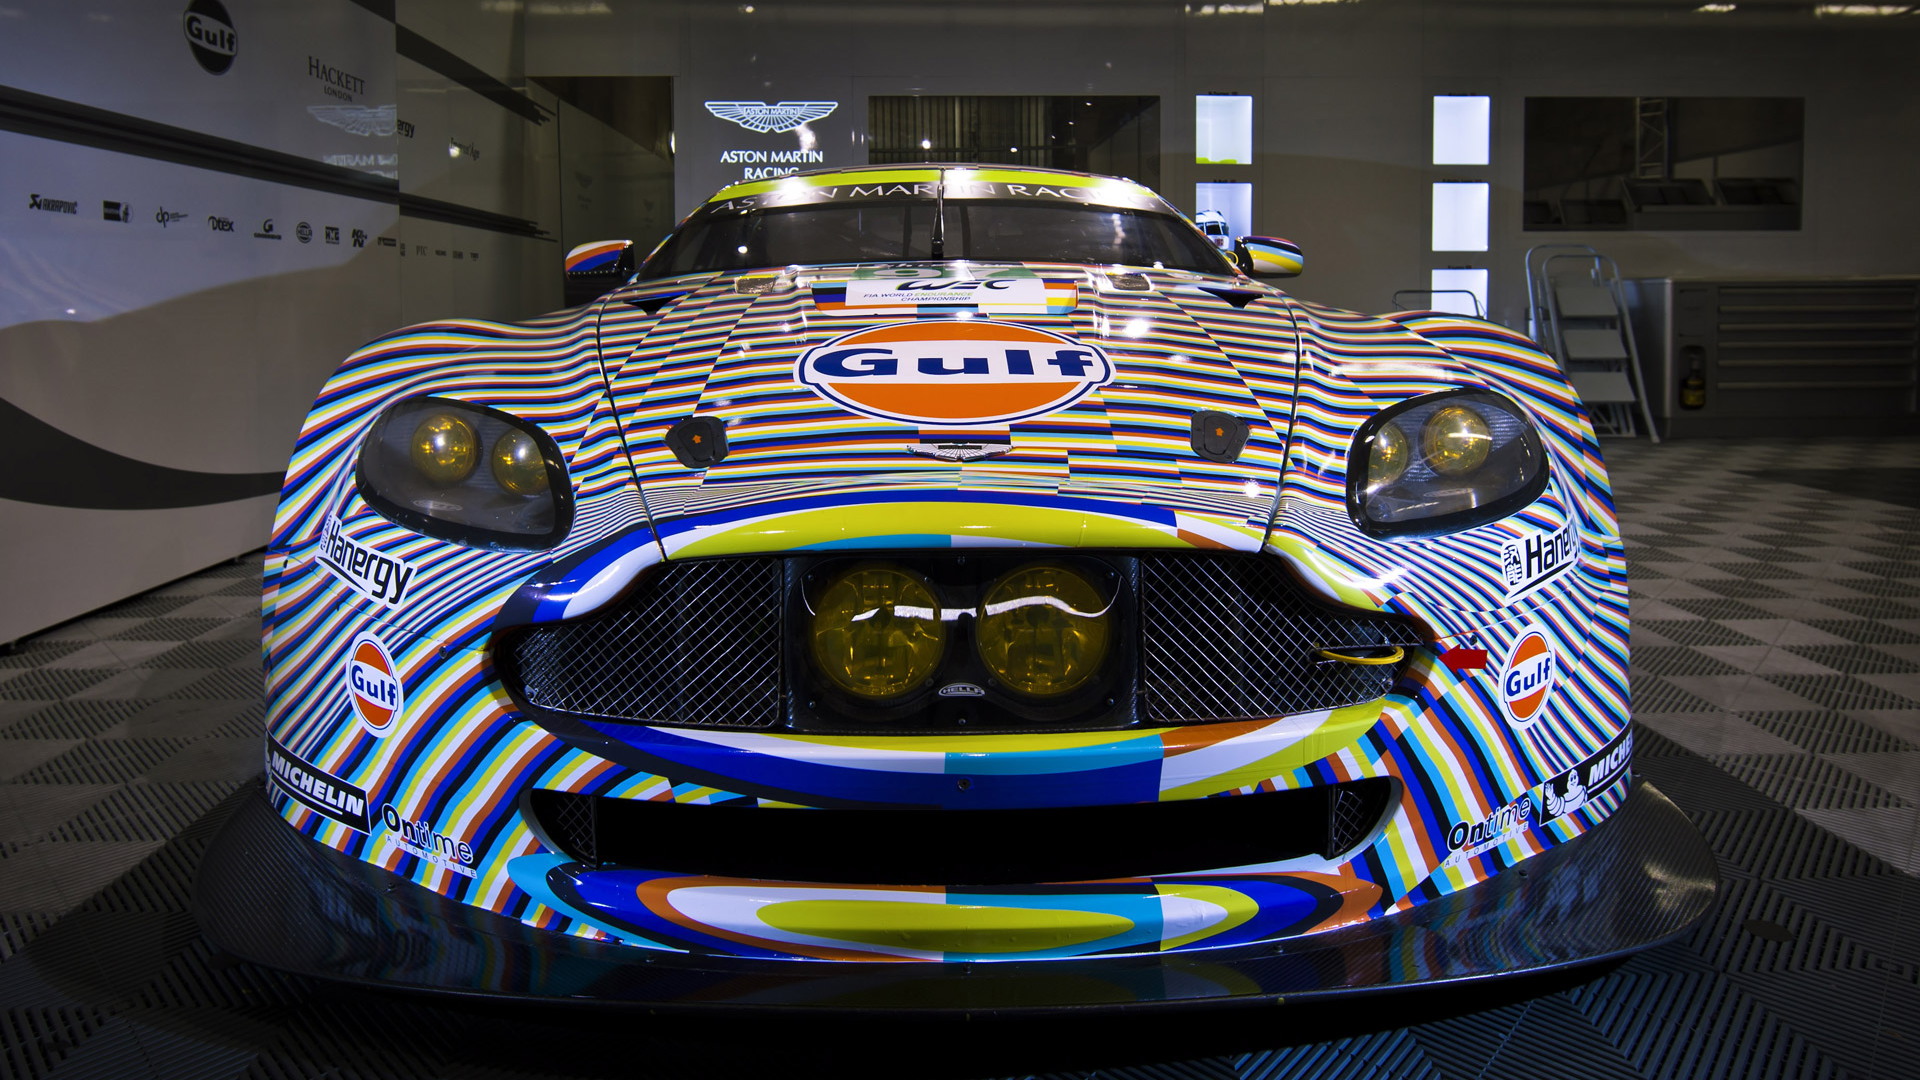 2015 Aston Martin Vantage GTE art car by Tobias Rahberger